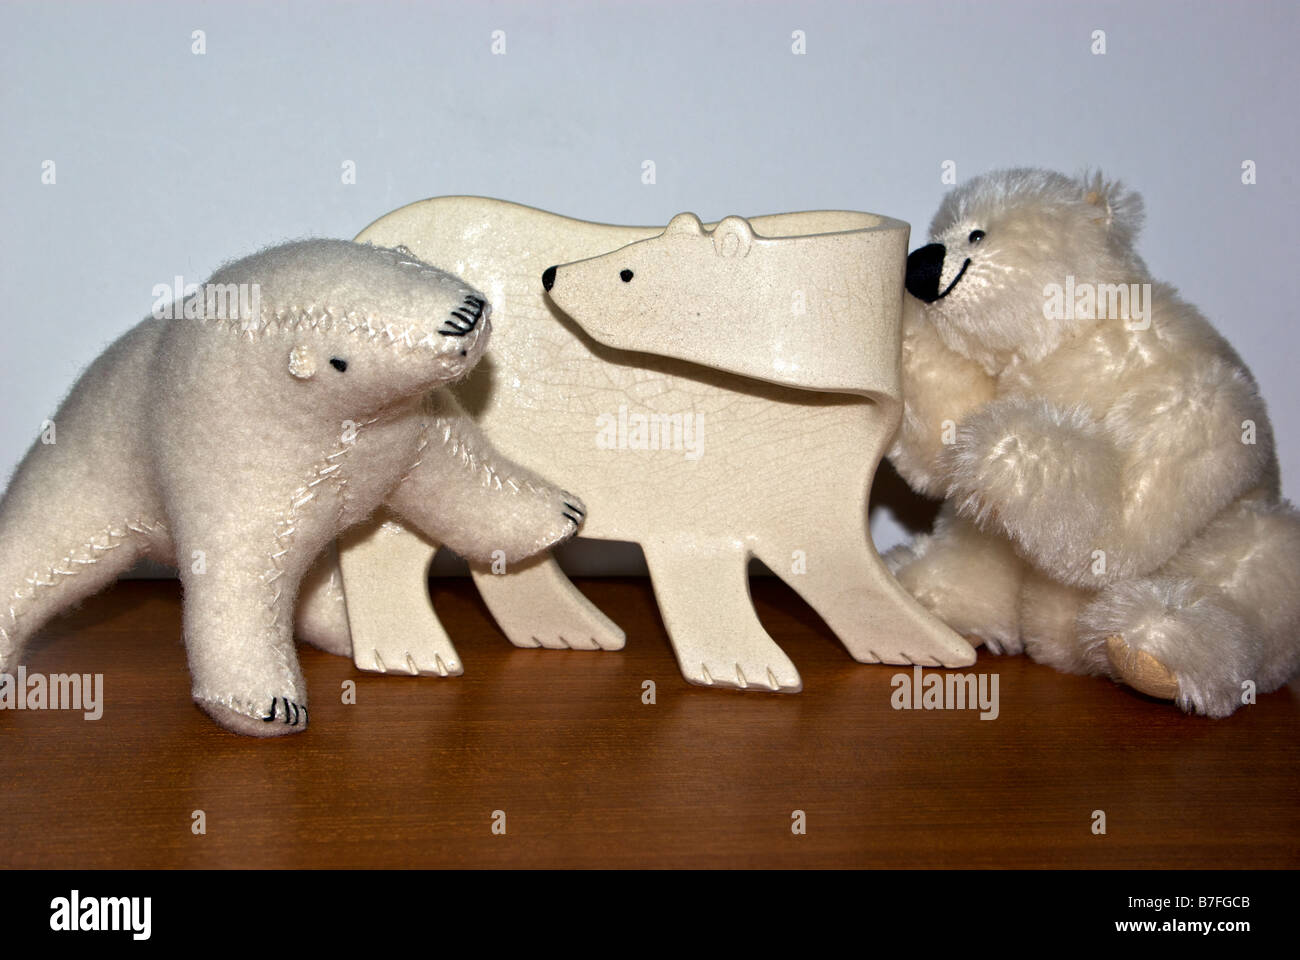 Ceramic and stuffed toy polar bears on teakwood table Stock Photo